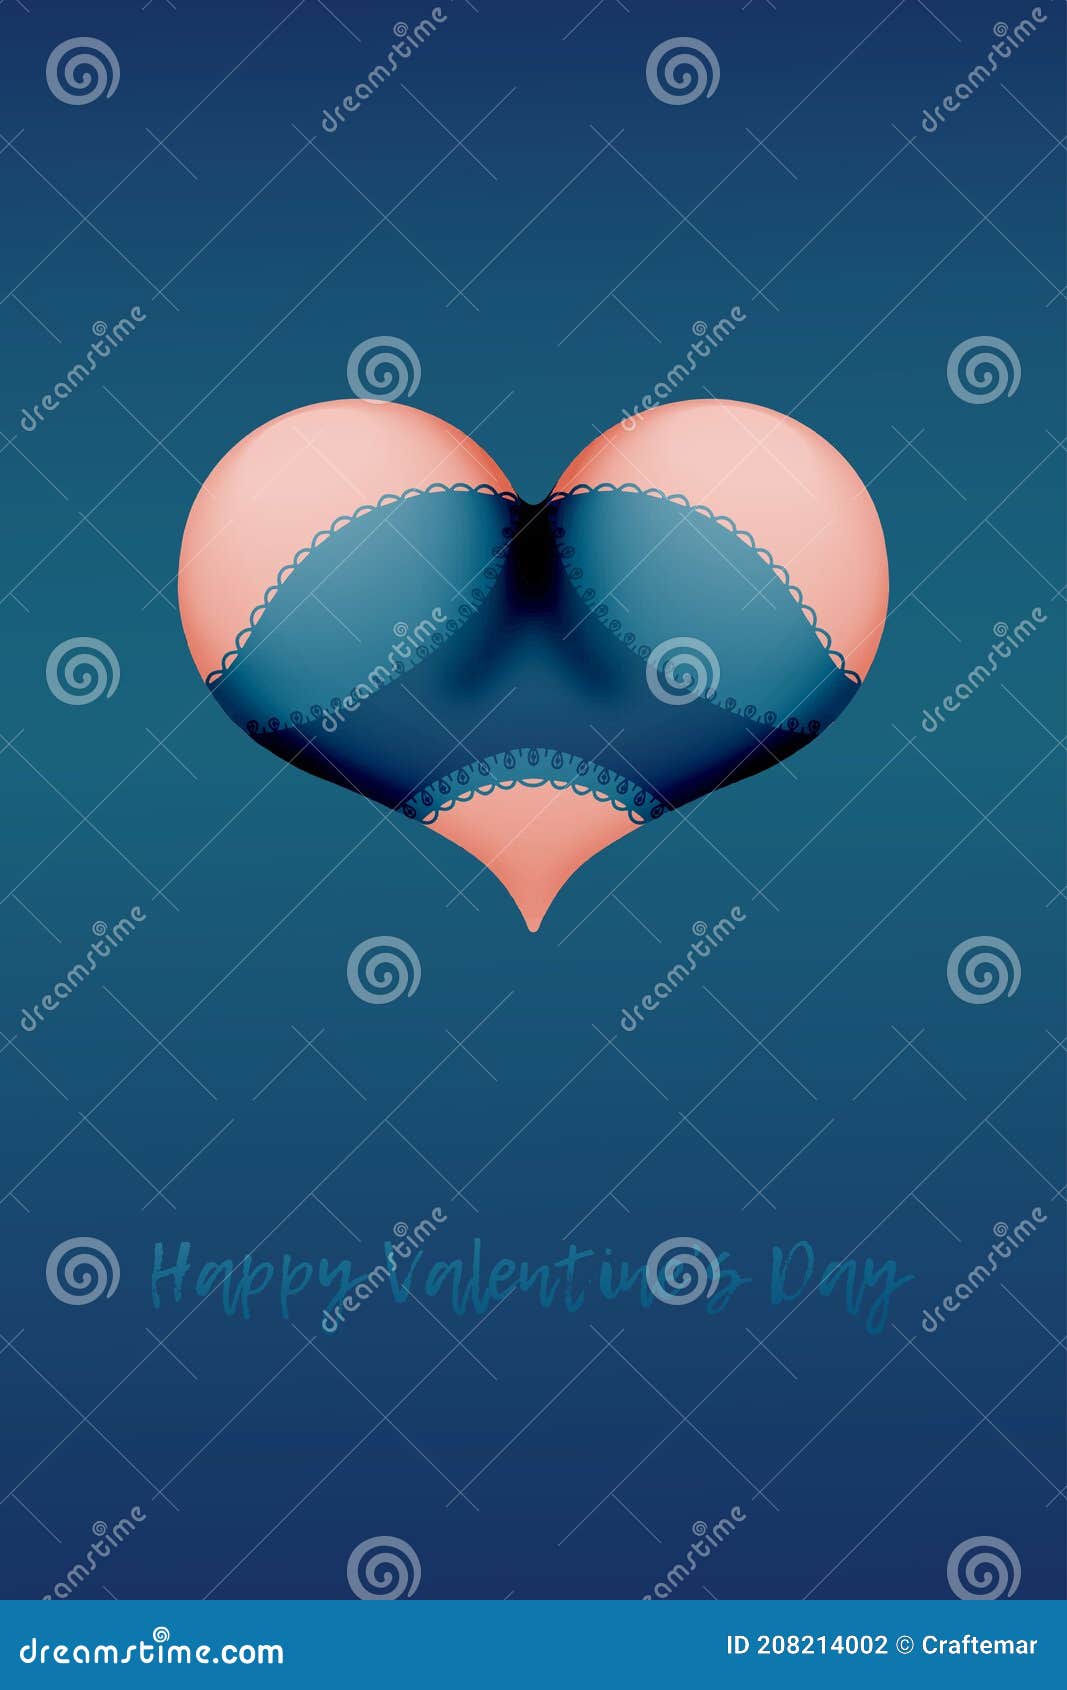 alind johari add photo sexy heart shaped ass